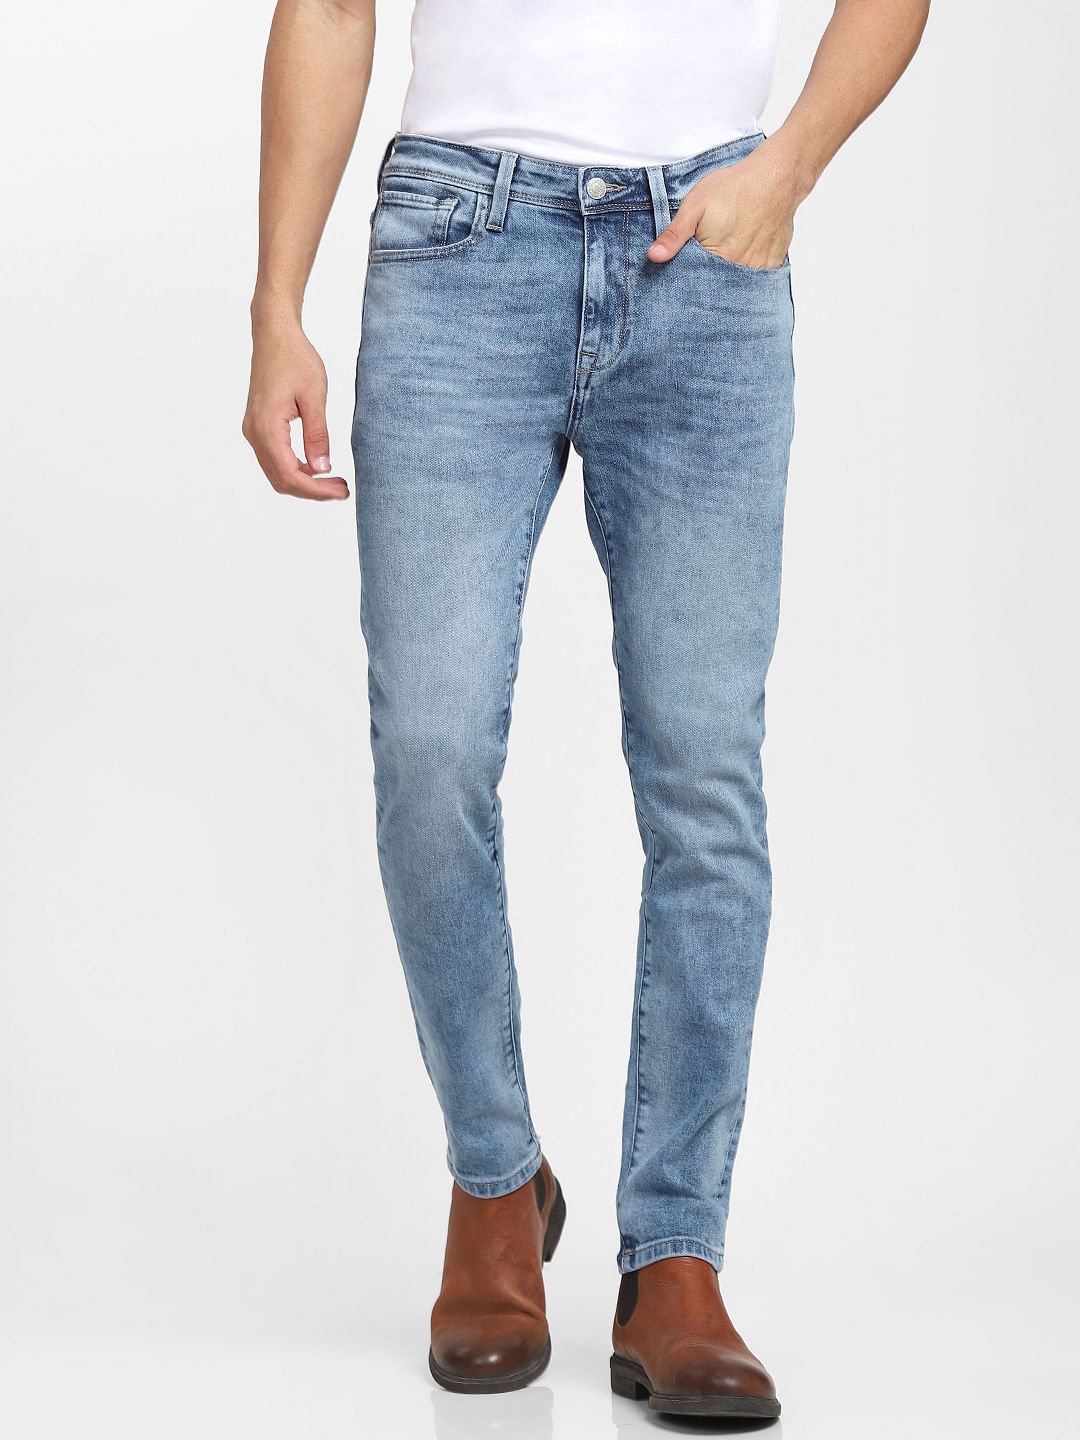 Shop Light Wash Blue Men Stylish Jeans At Great Price – Rockstar Jeans